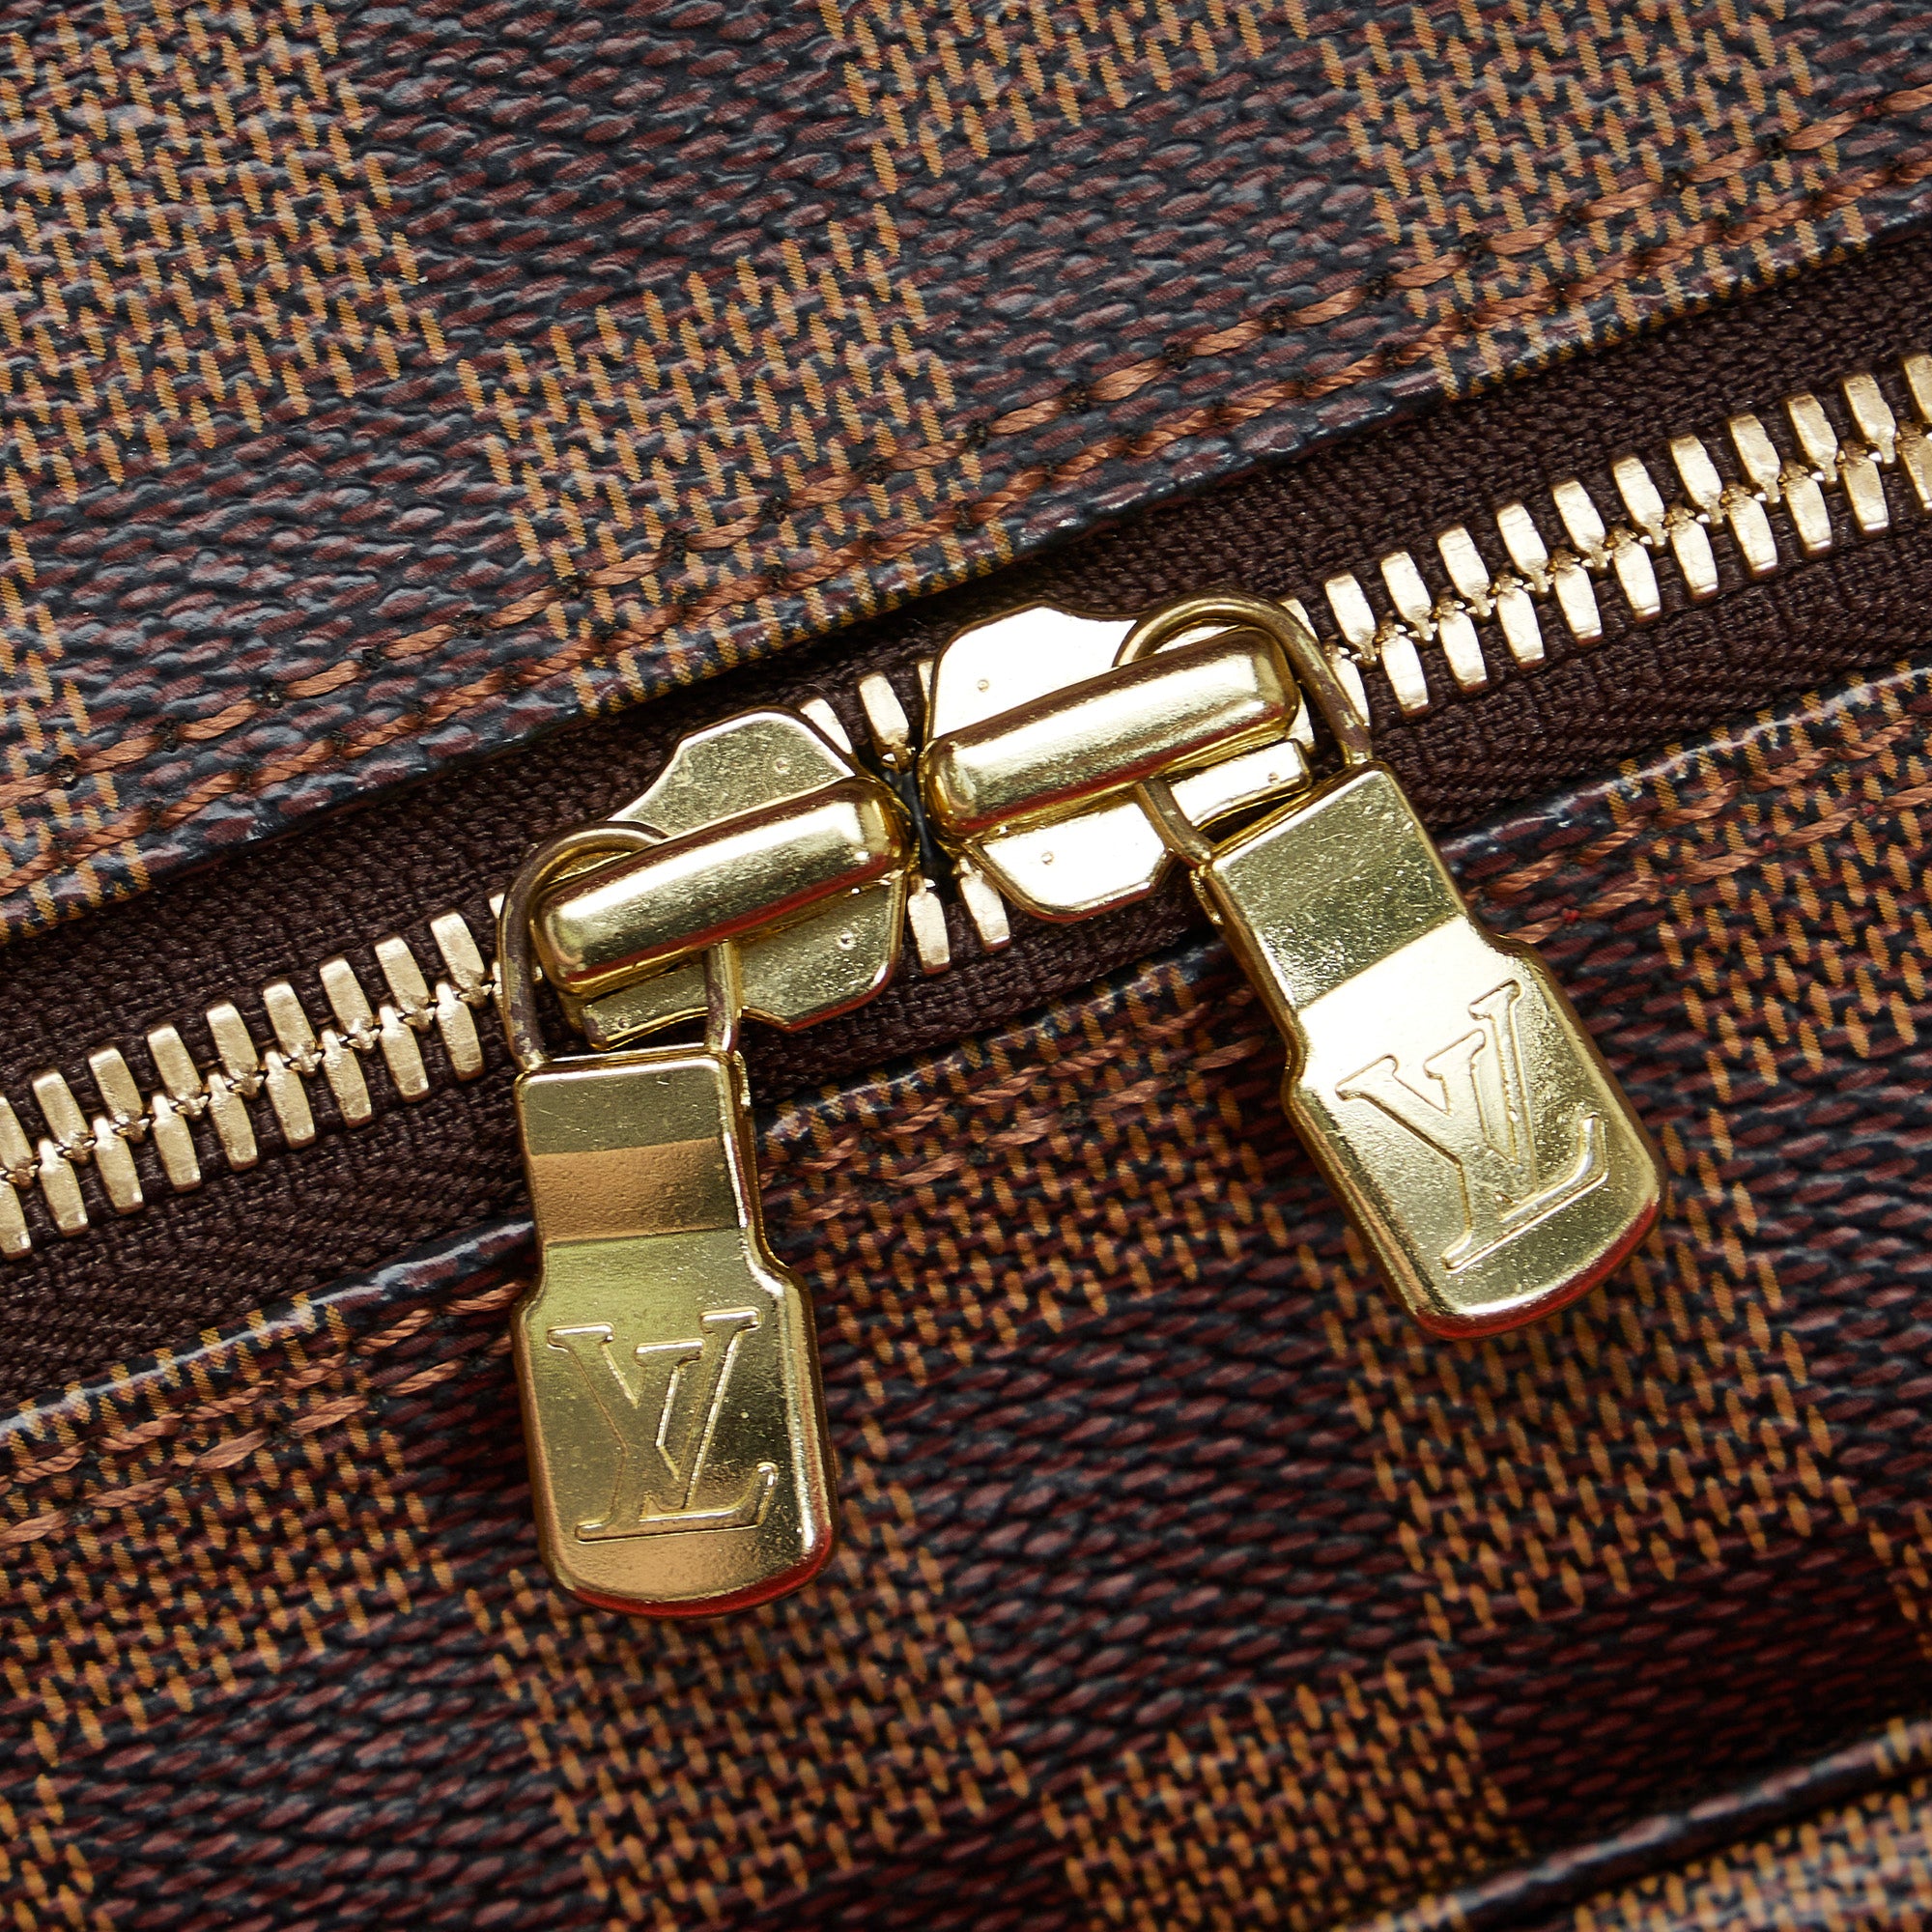 Louis Vuitton Naviglio Handbag Damier - ShopStyle Crossbody Bags